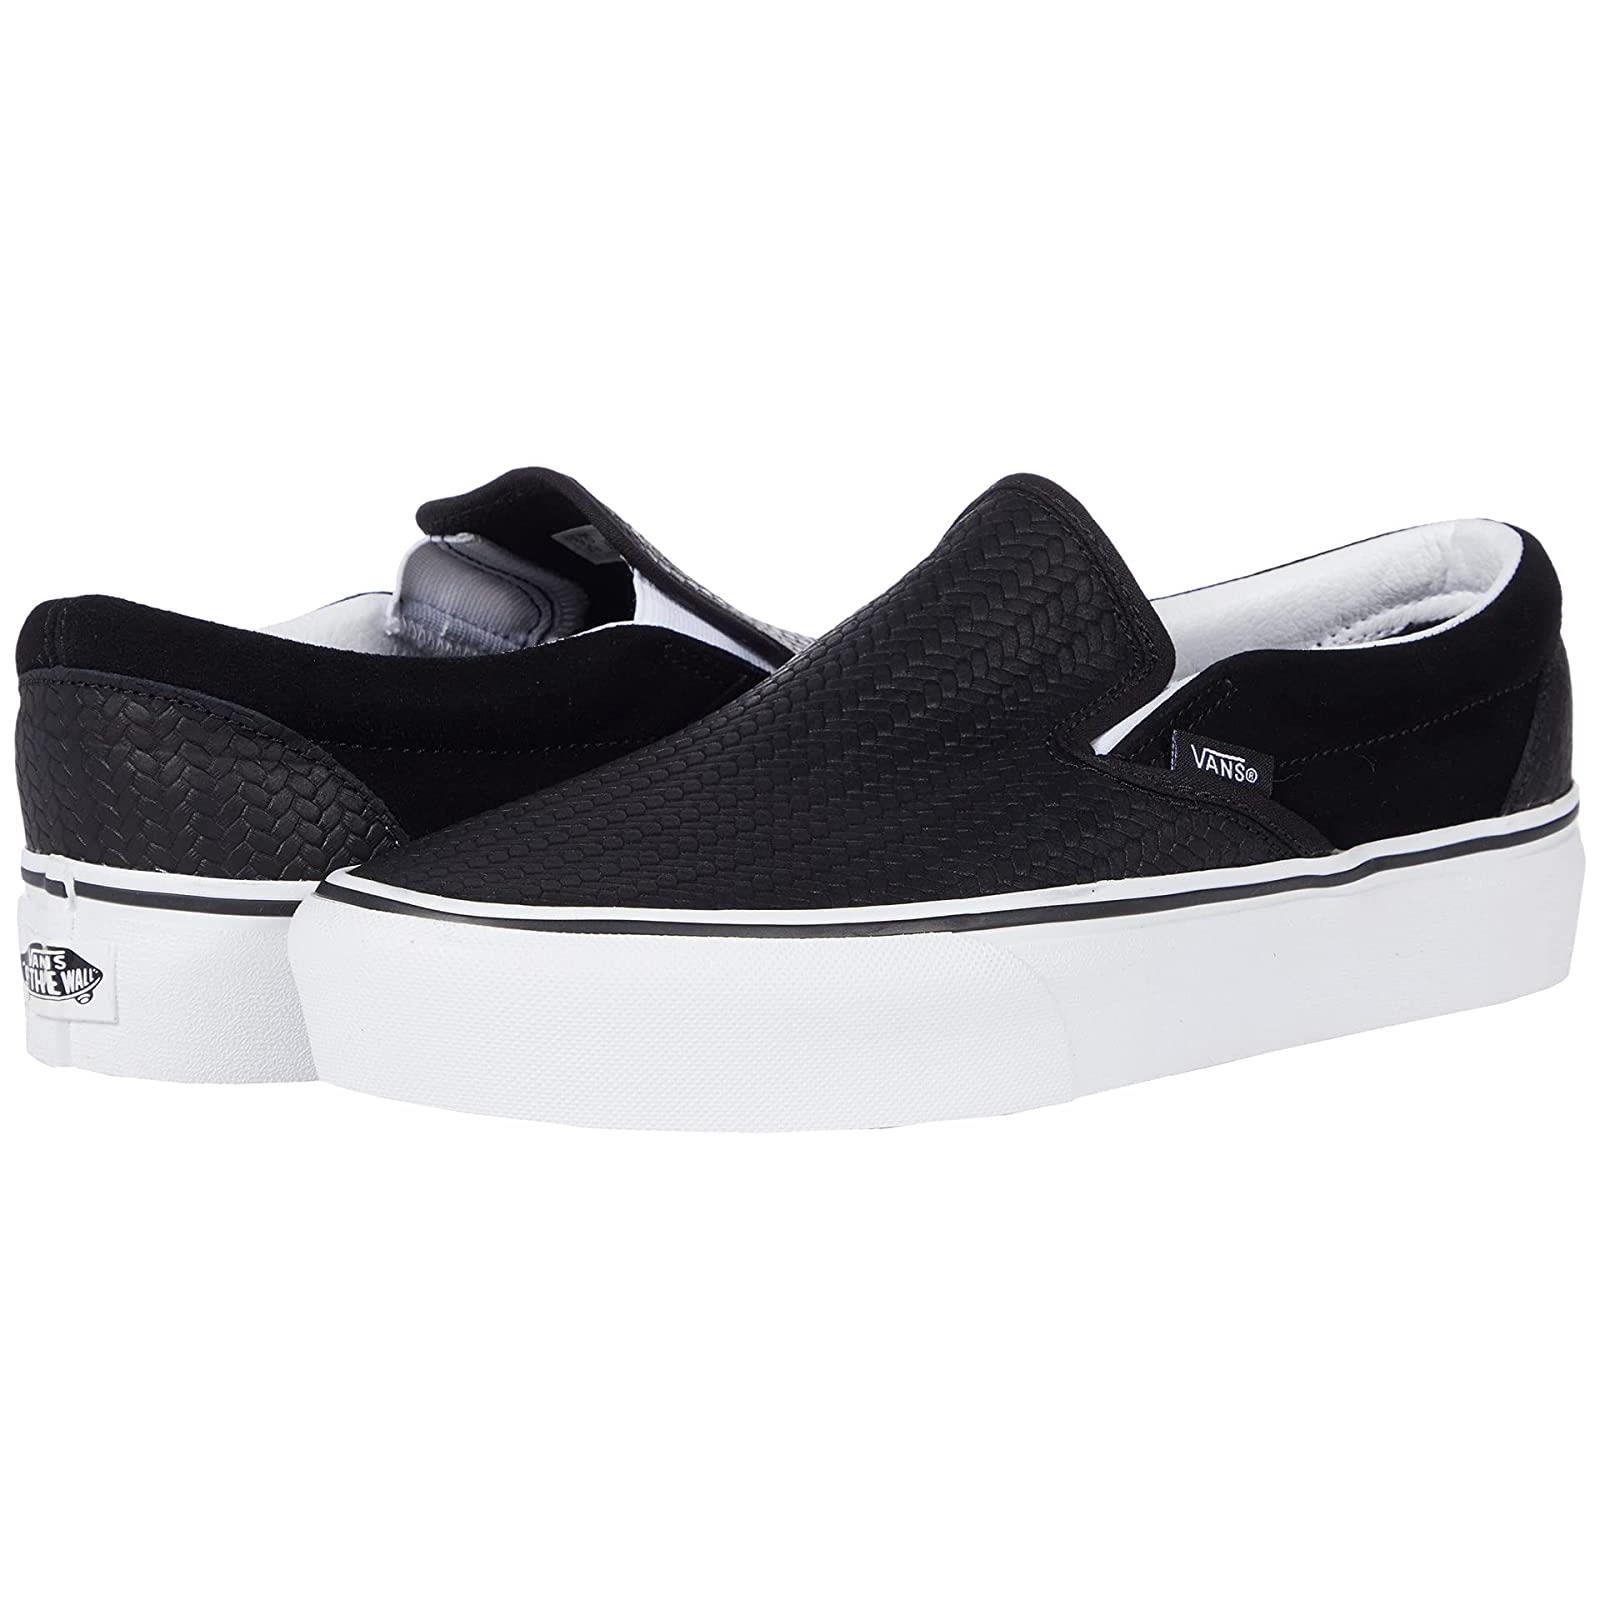 Adult Unisex Sneakers Athletic Shoes Vans Classic Slip-on Platform (Suede Emboss) Black/True White